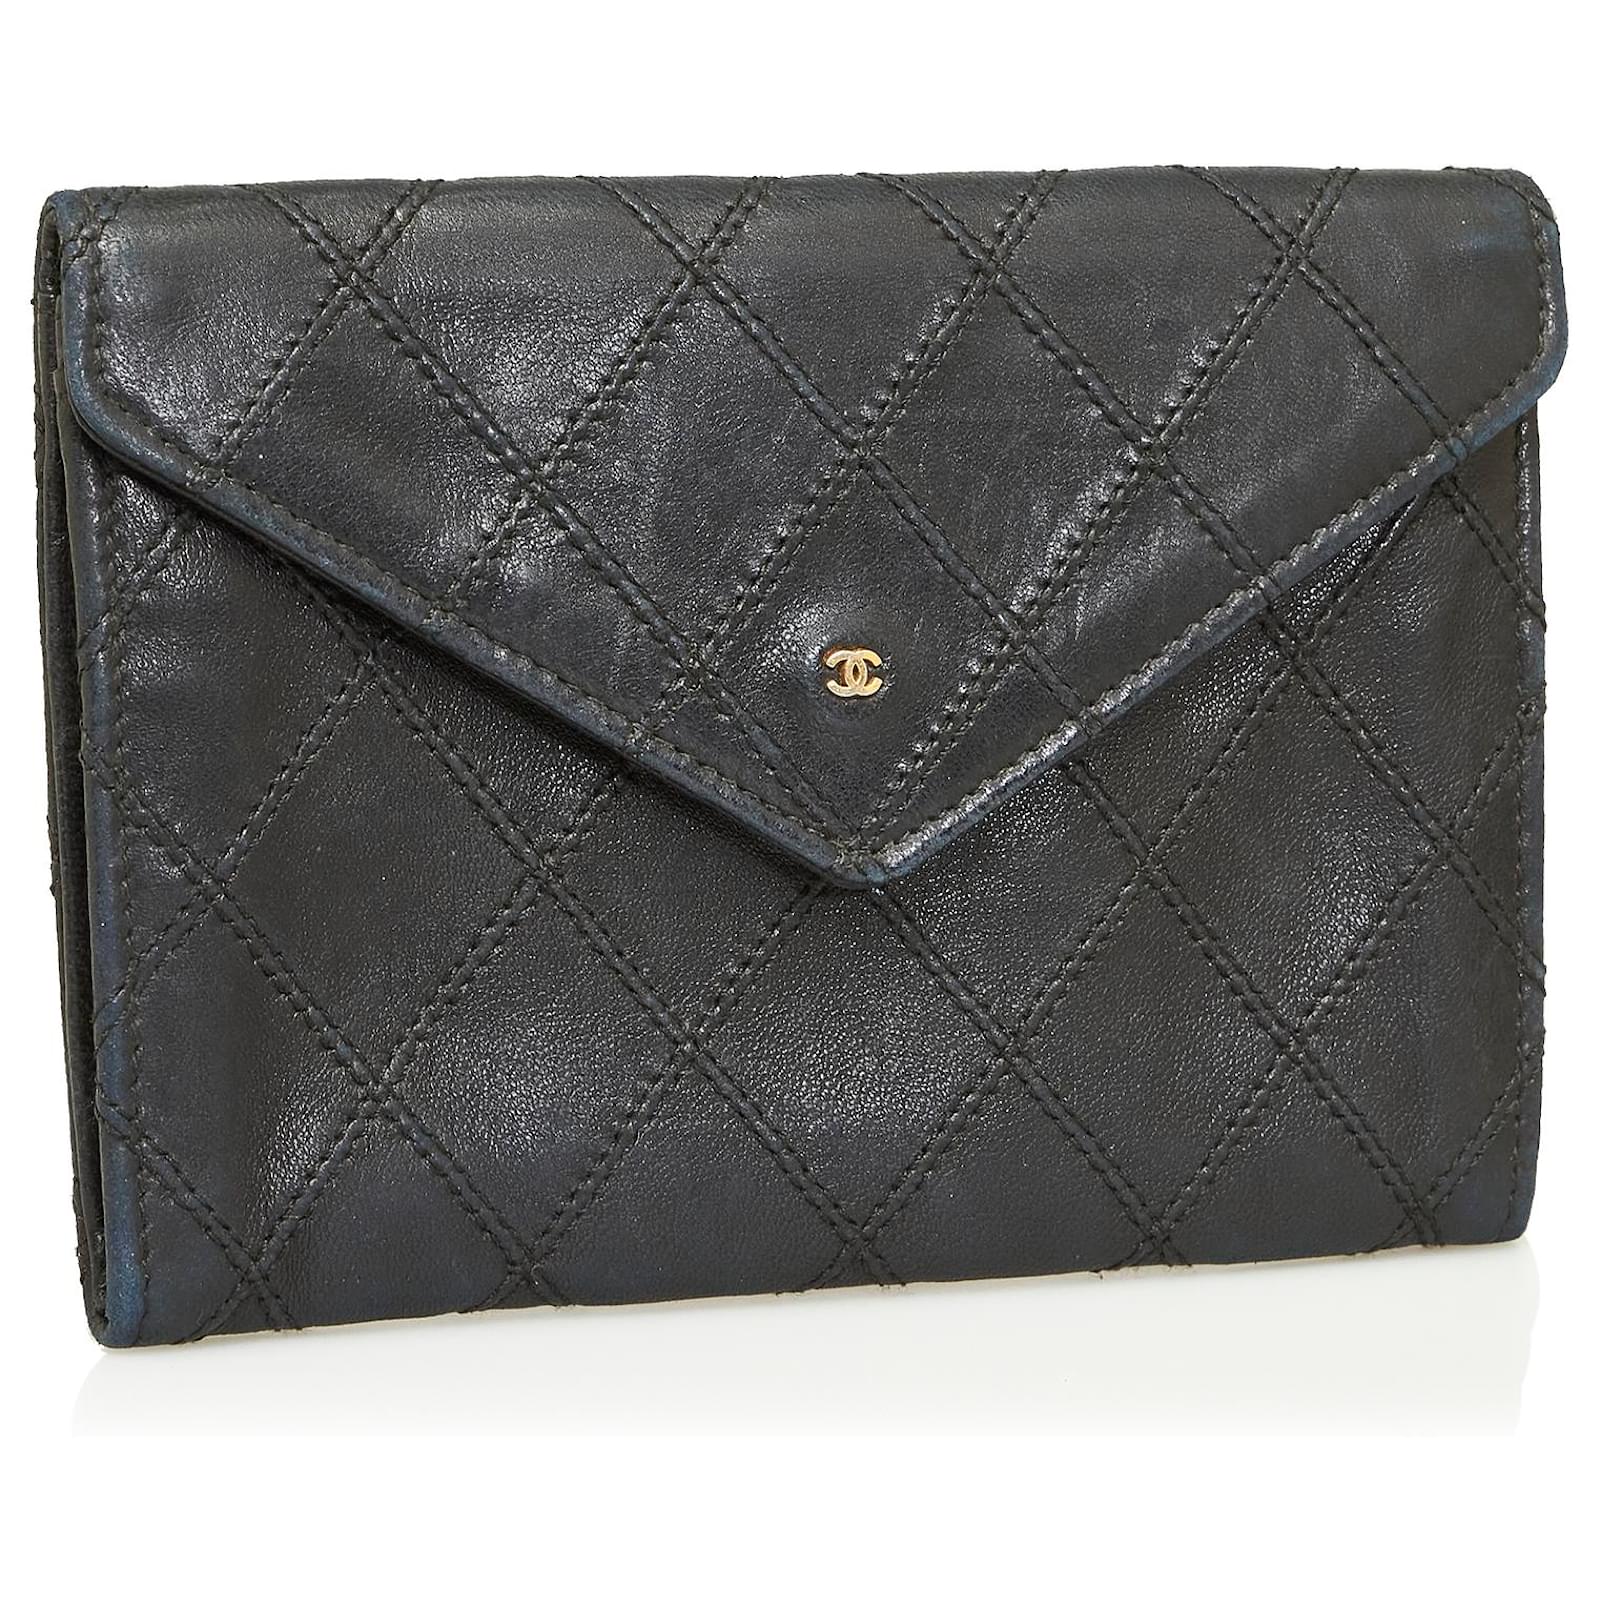 Chanel Black CC Wild Stitch Small Wallet